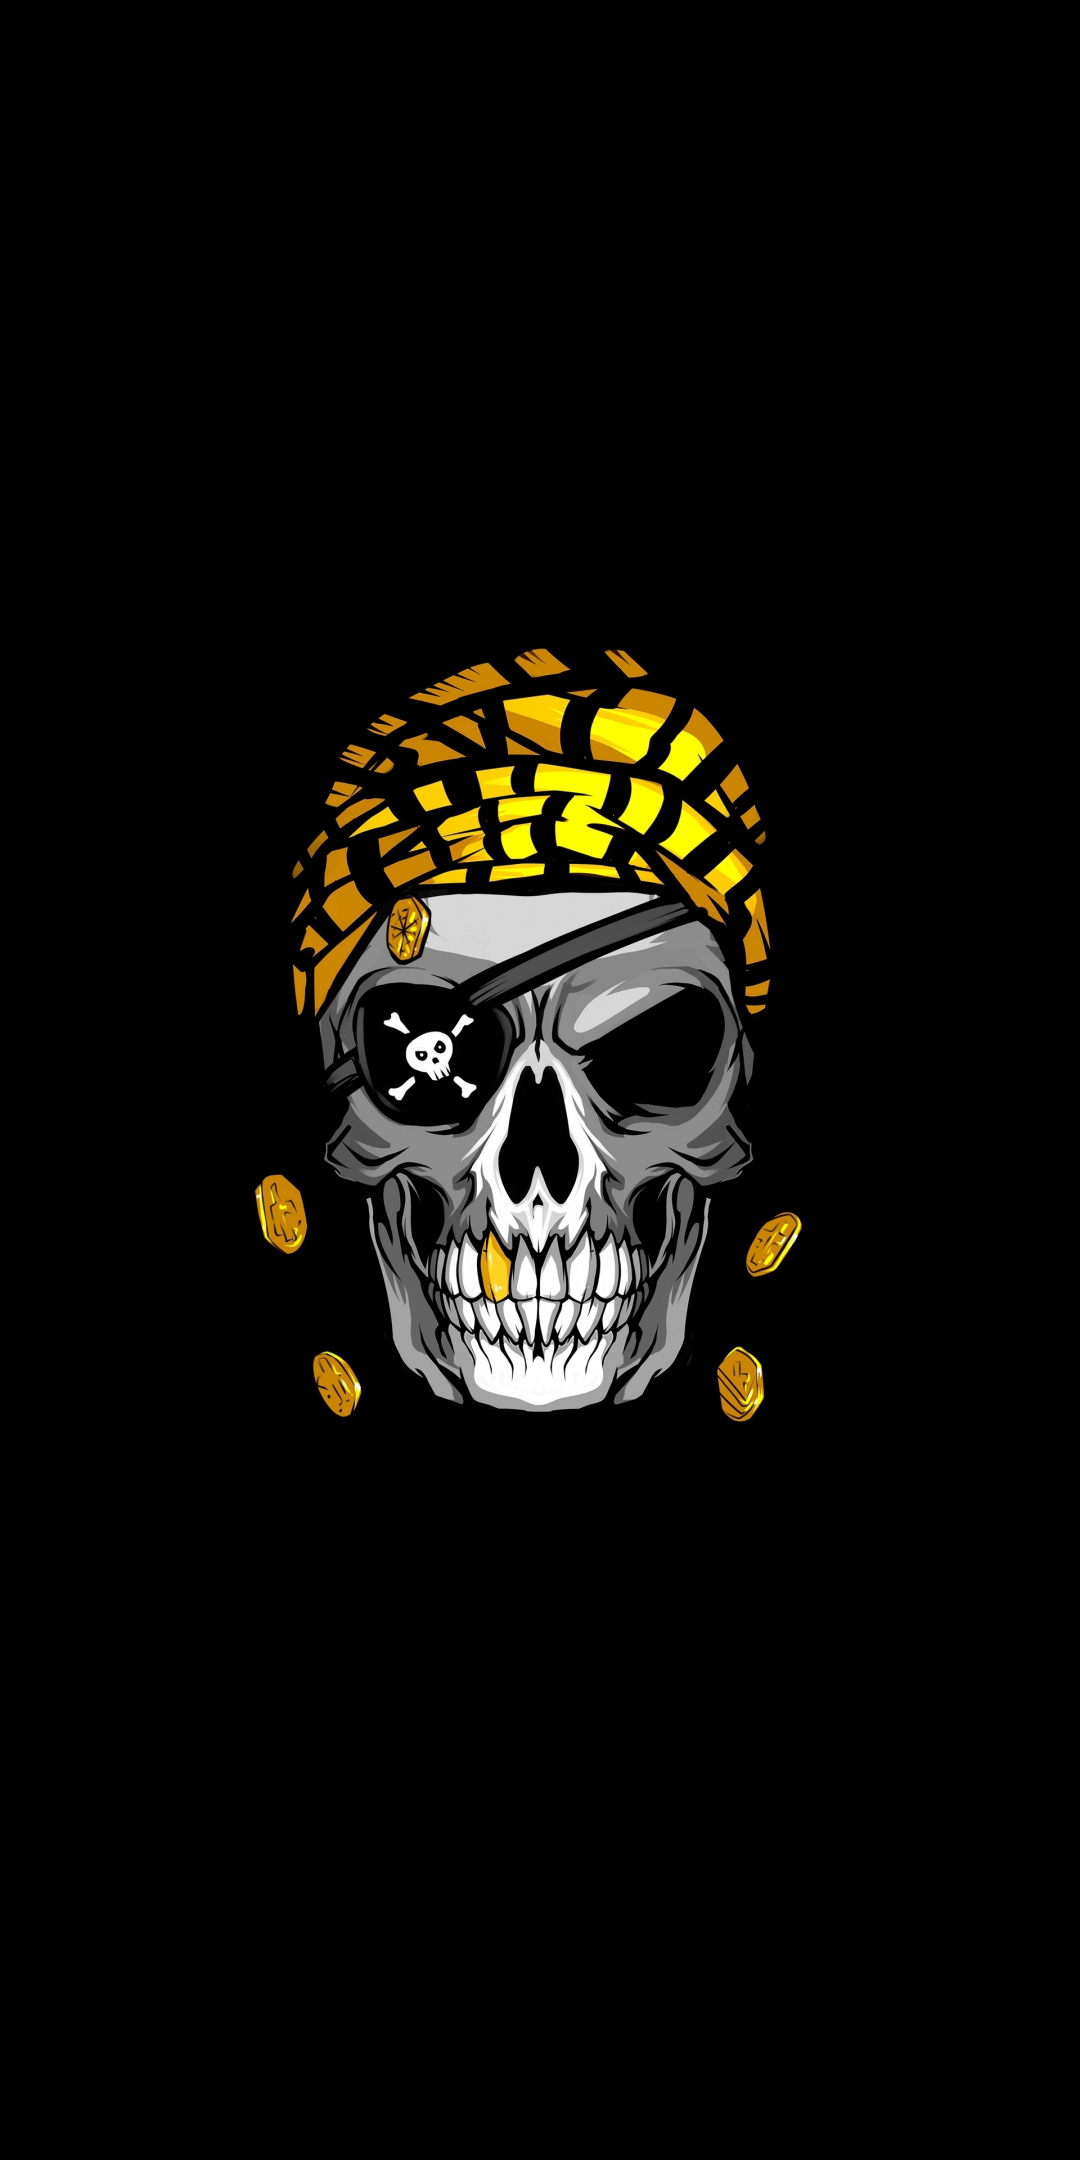 Pirate's skull, gold, 1080x2160 wallpaper